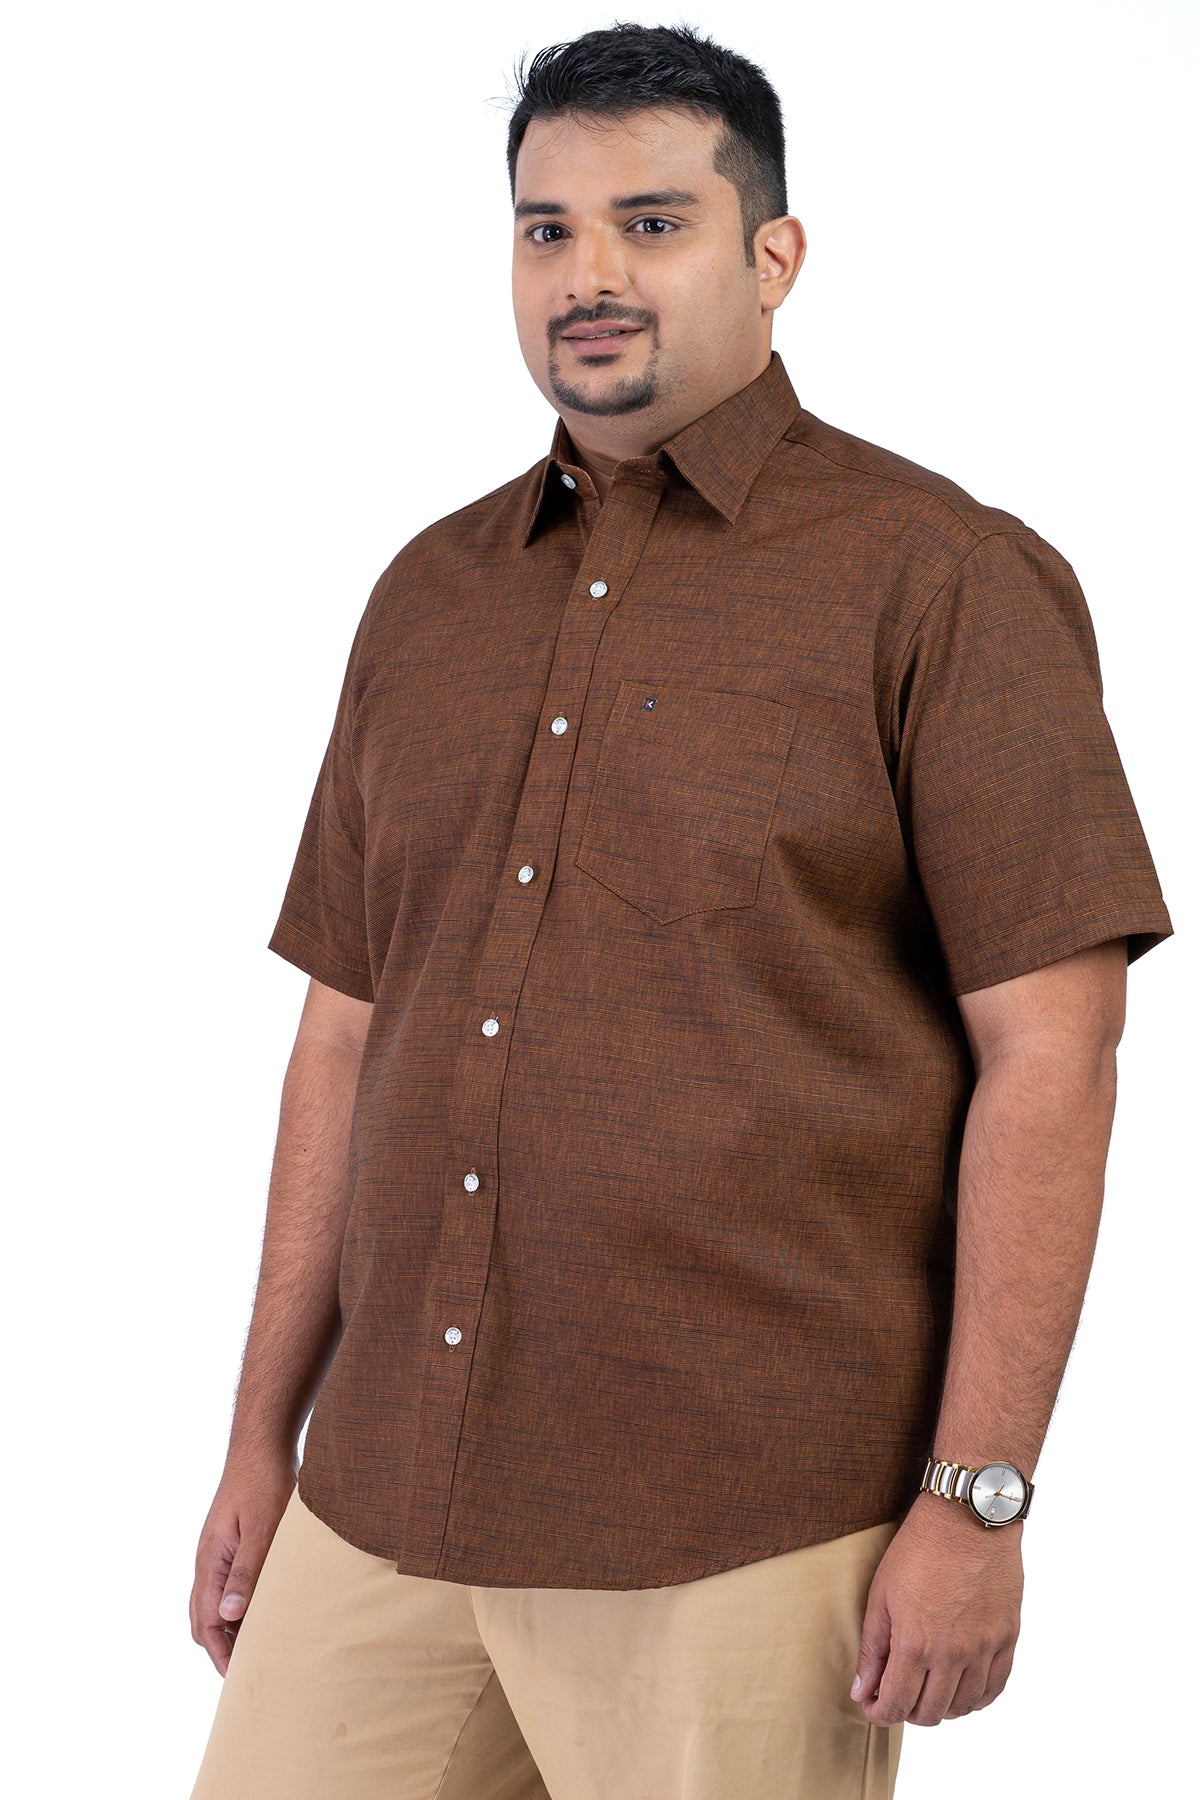 Men's Brown Plus Size Shirt